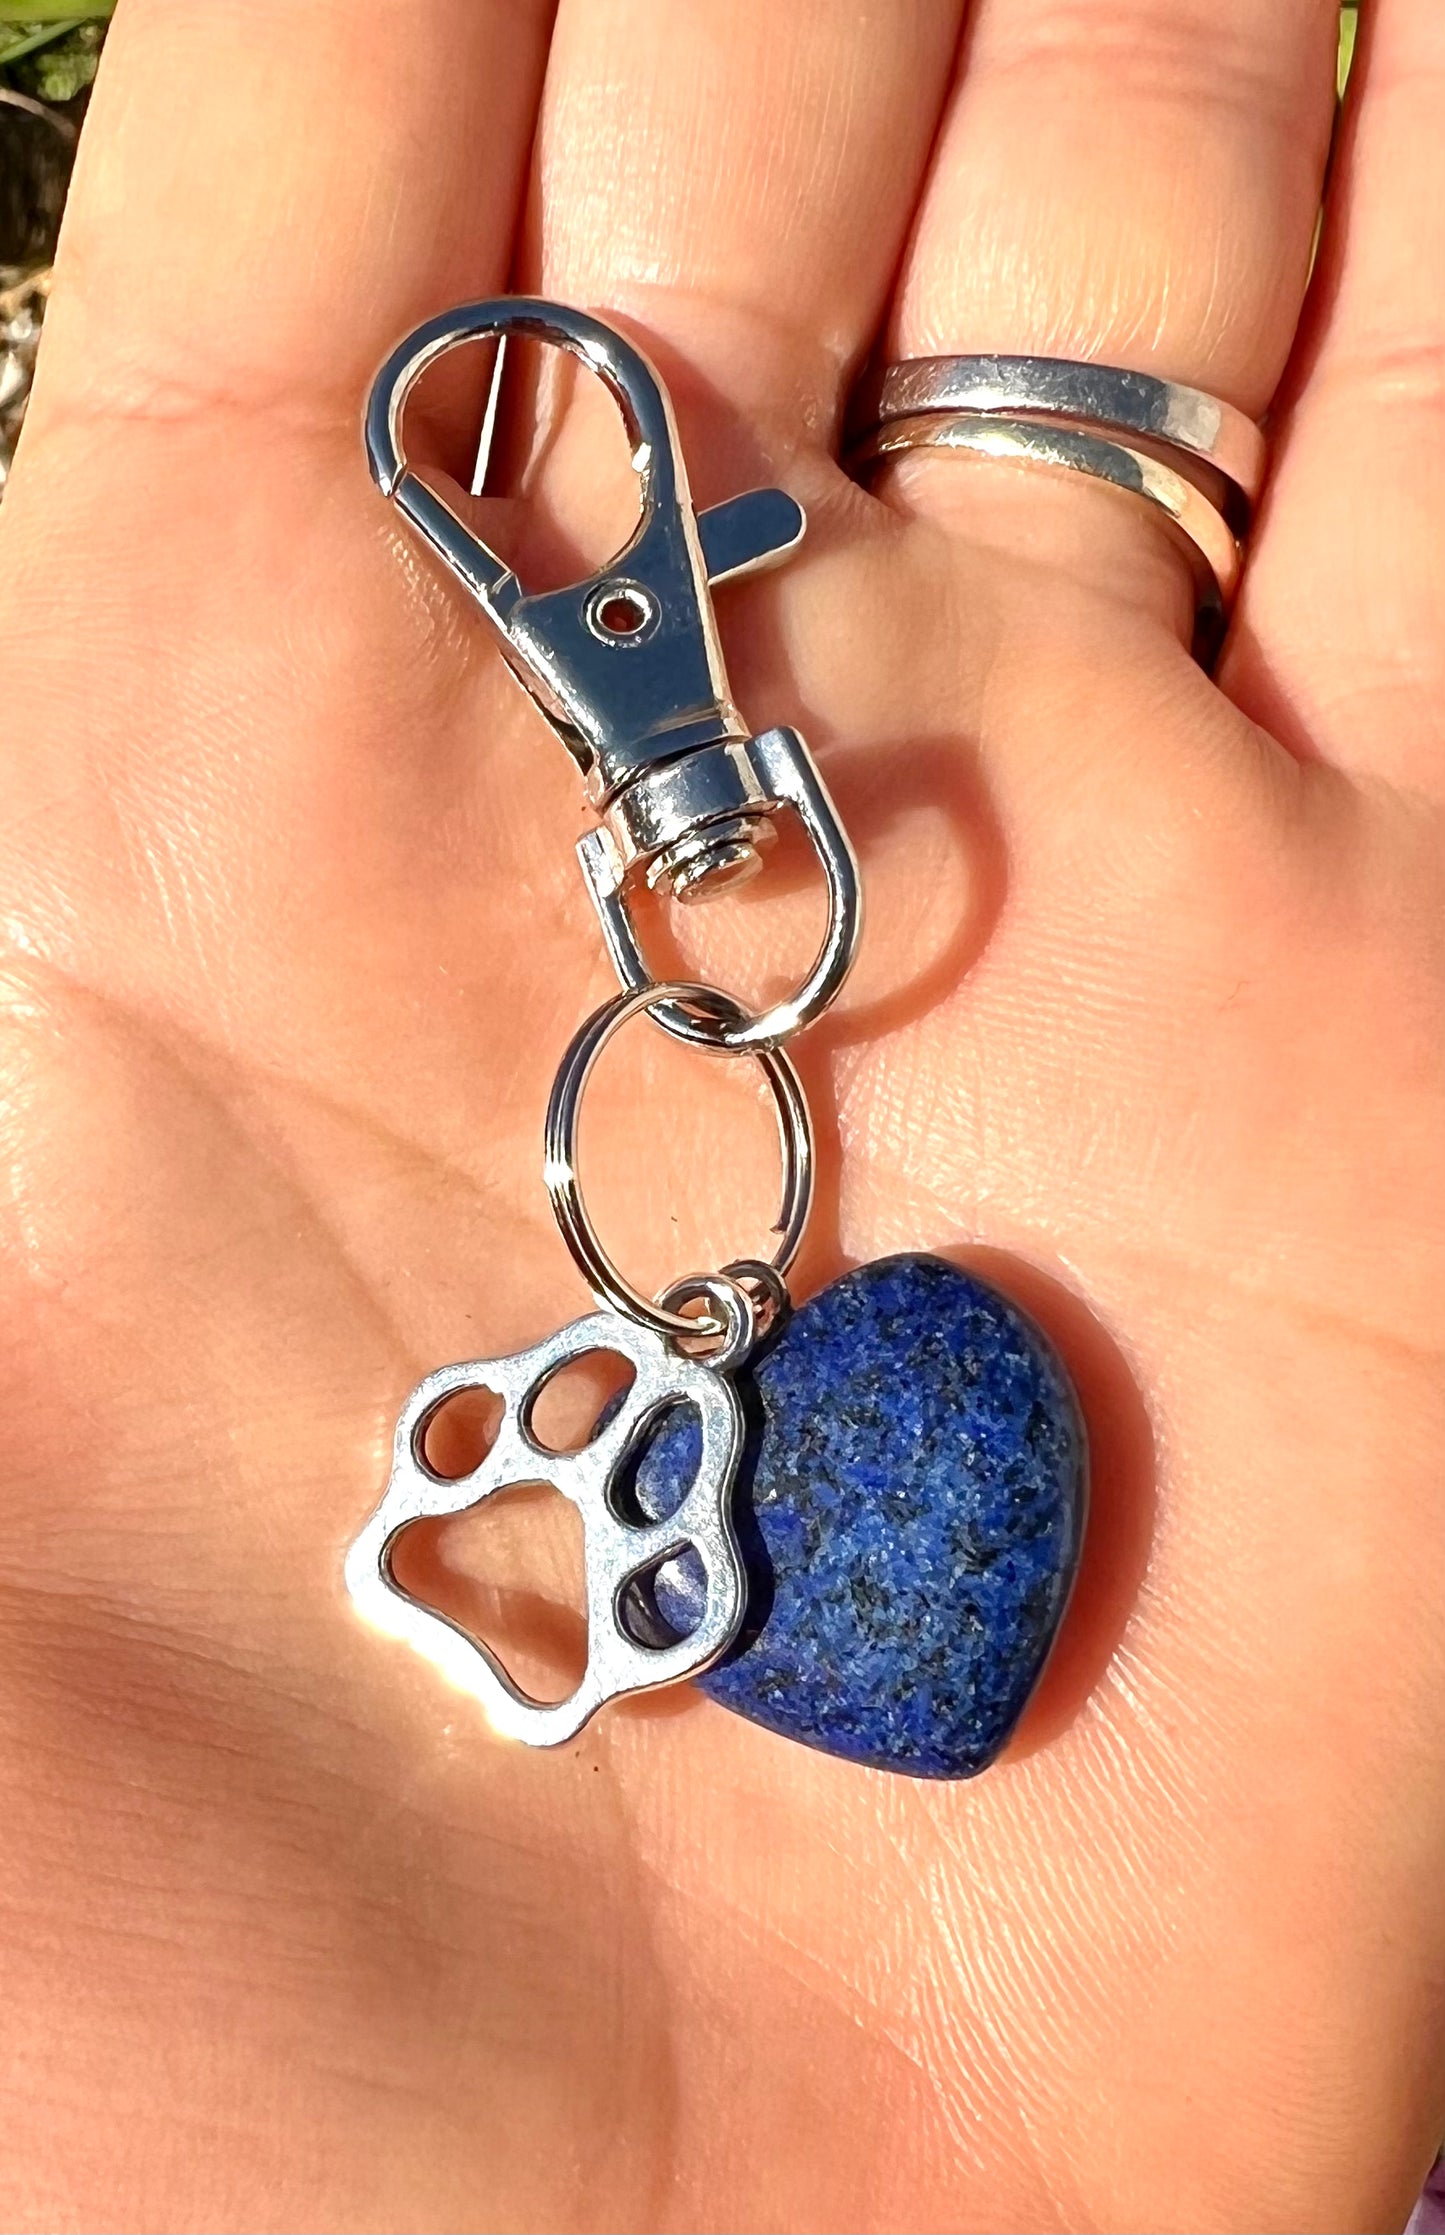 Lapis Lazuli Crystal Healing Gemstone Collar Charms for Pets